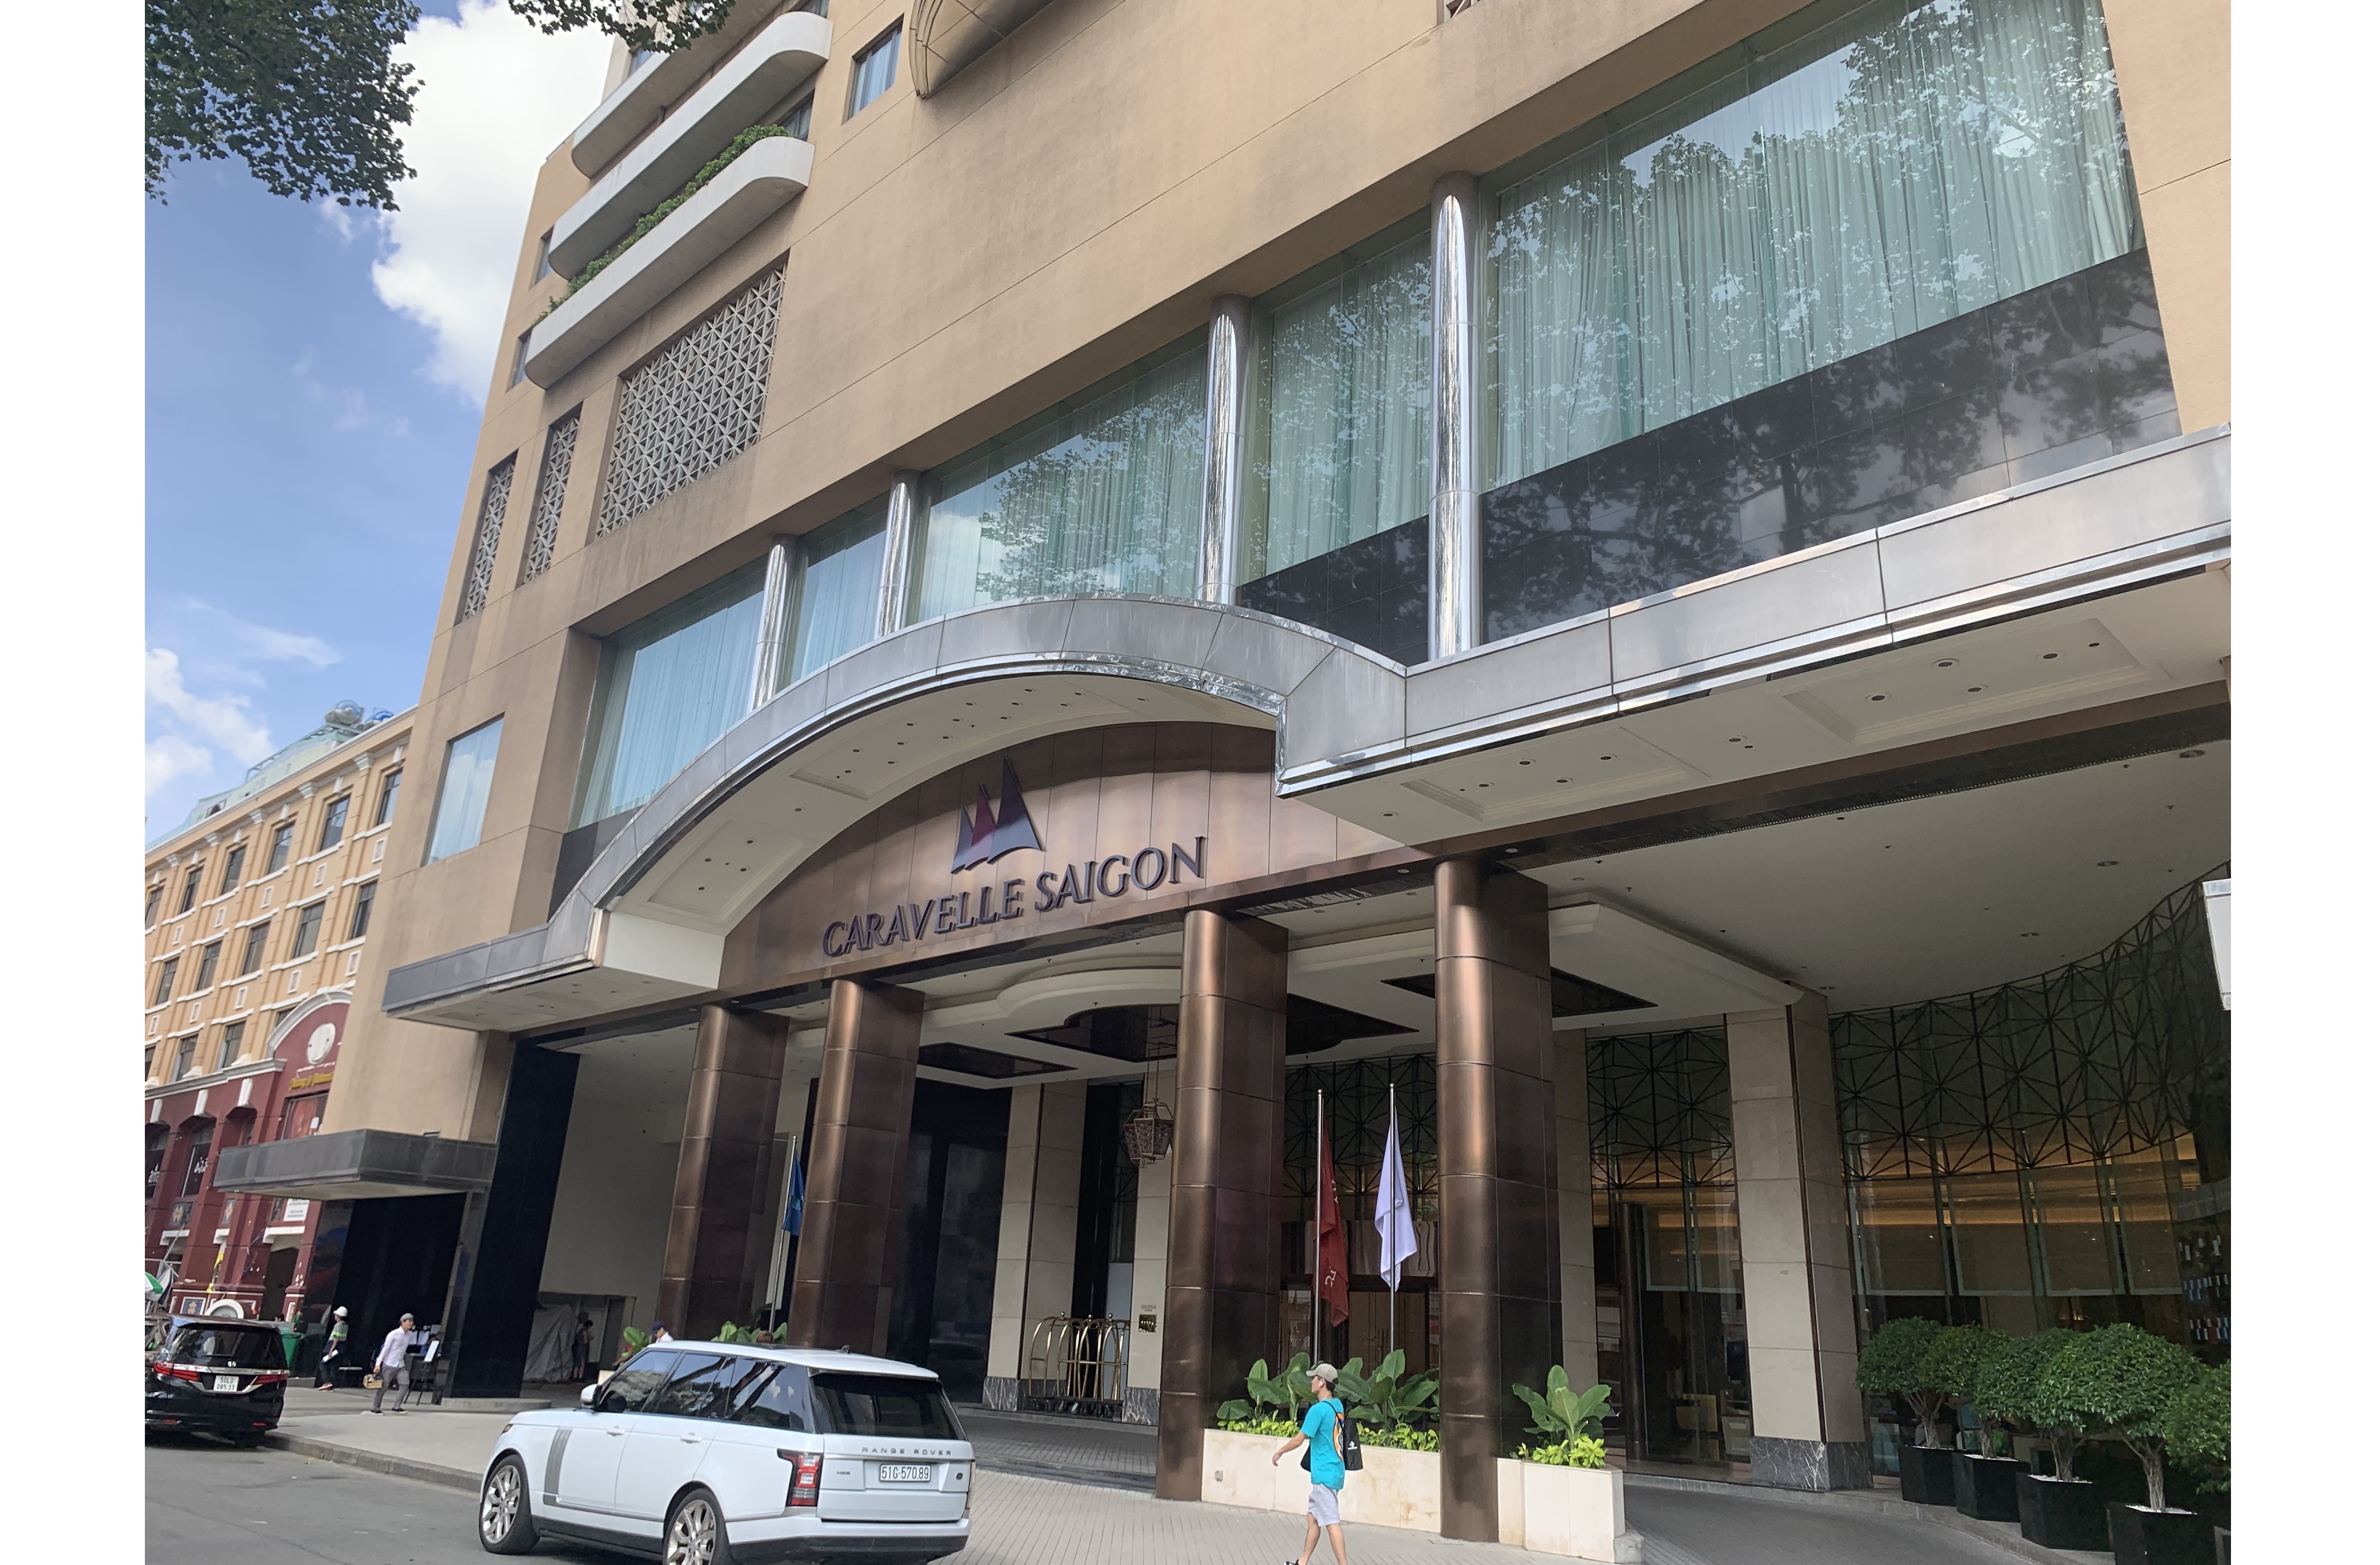 Caravelle Saigon Hotel, Vietnam